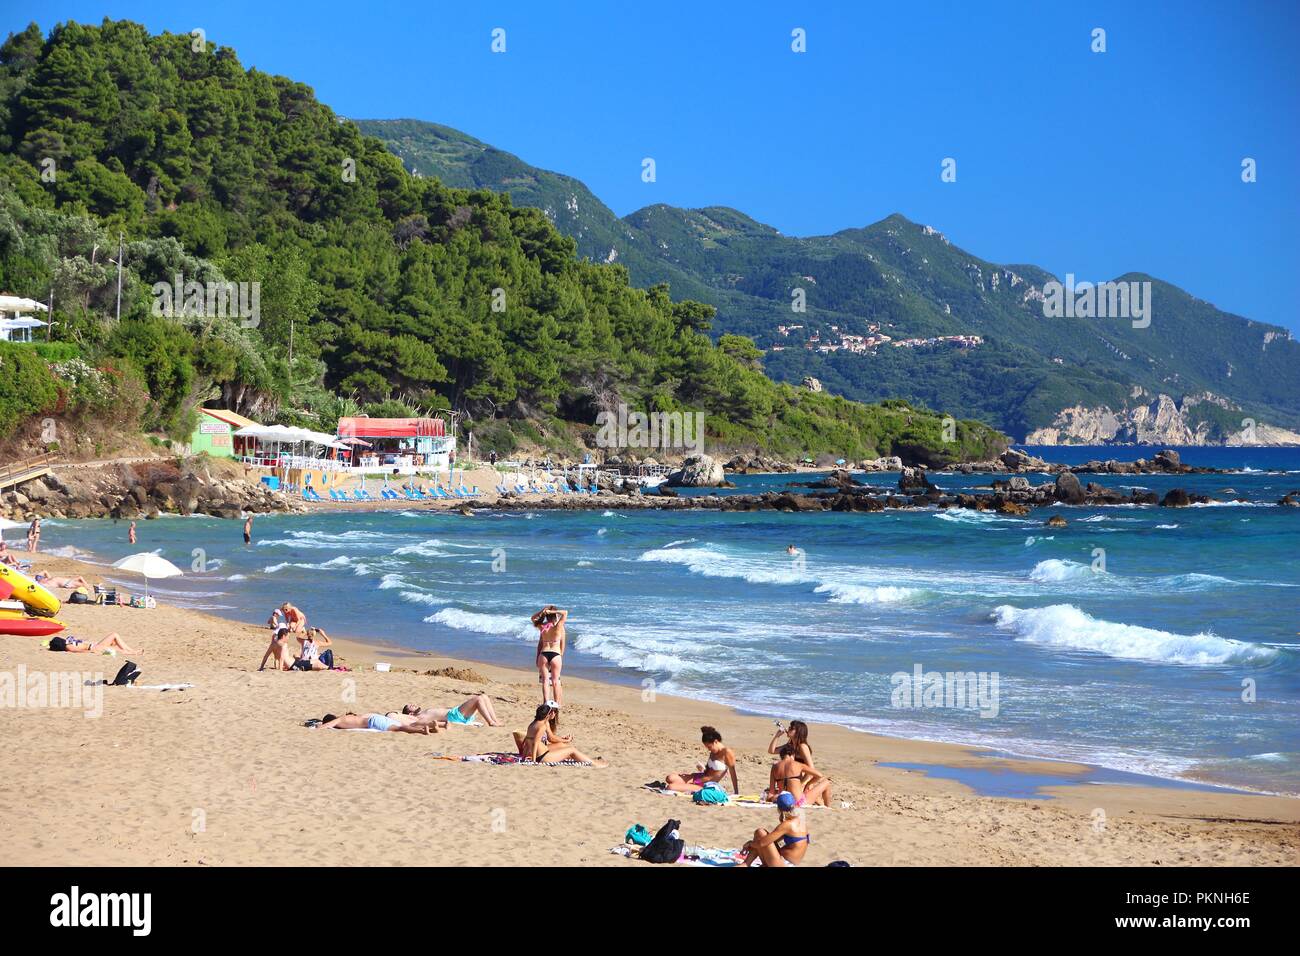 CORFU, GREECE - JUNE 3, 2016: People enjoy the beach in Pelekas, Corfu Island, Greece. 558,000 tourists visited Corfu in 2012. Stock Photo